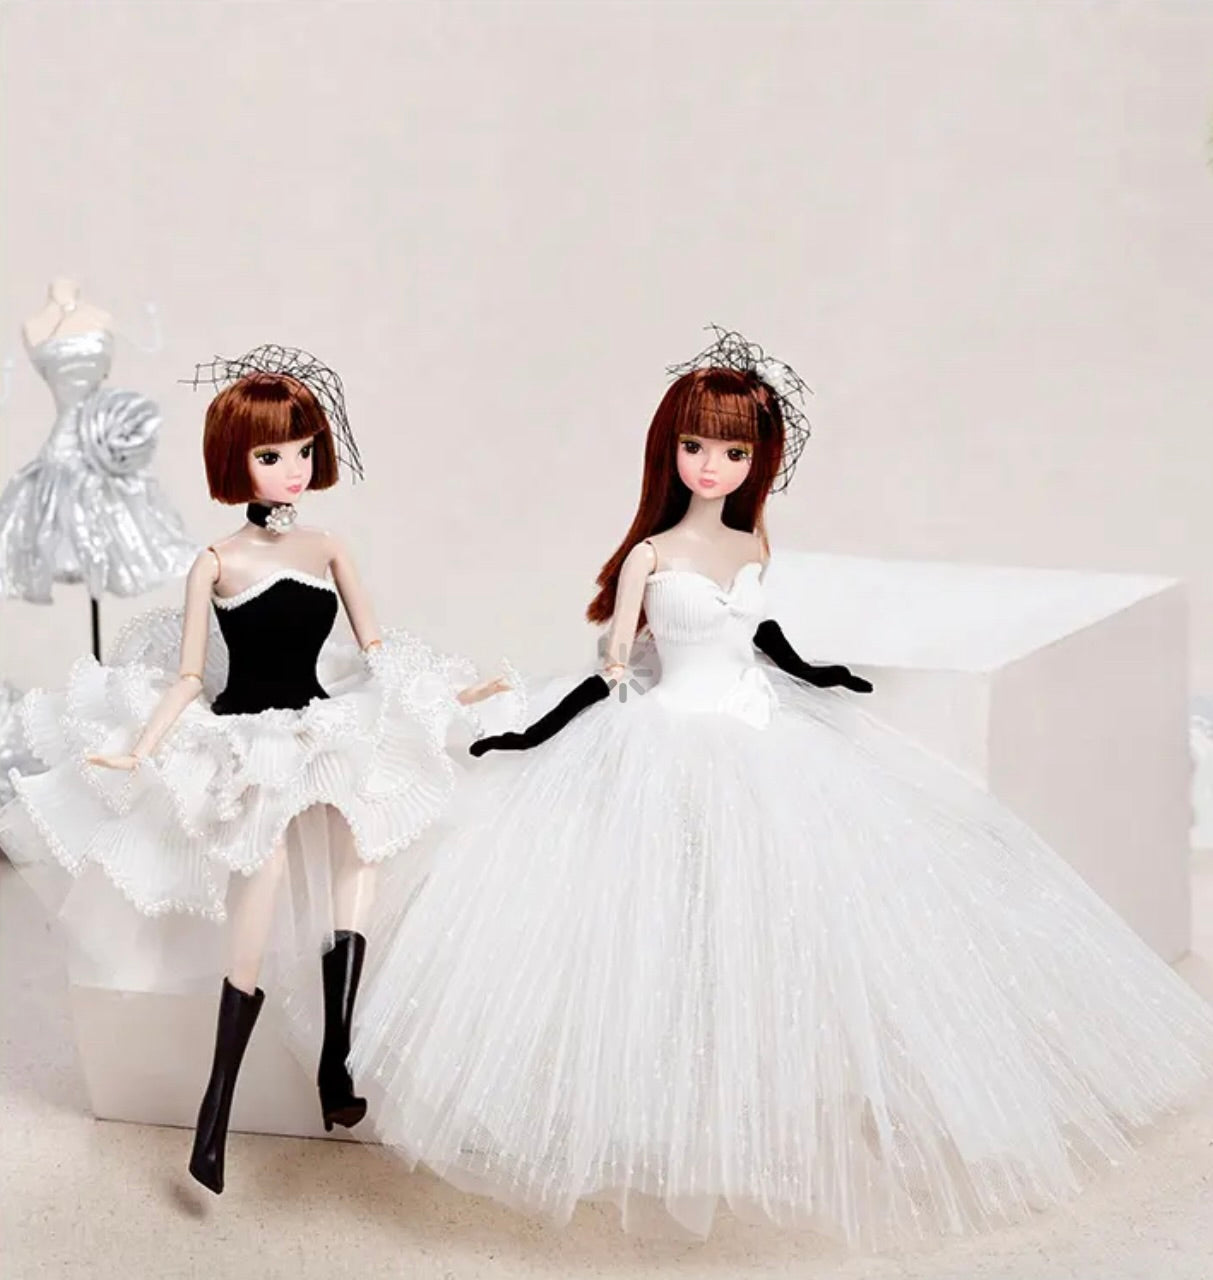 DOLLY® BRIDE DOLL WITH WHITE WEDDING TUTU DRESS - Bjd 12 joints 12 inch 30 cm 1/6 scale fashion doll